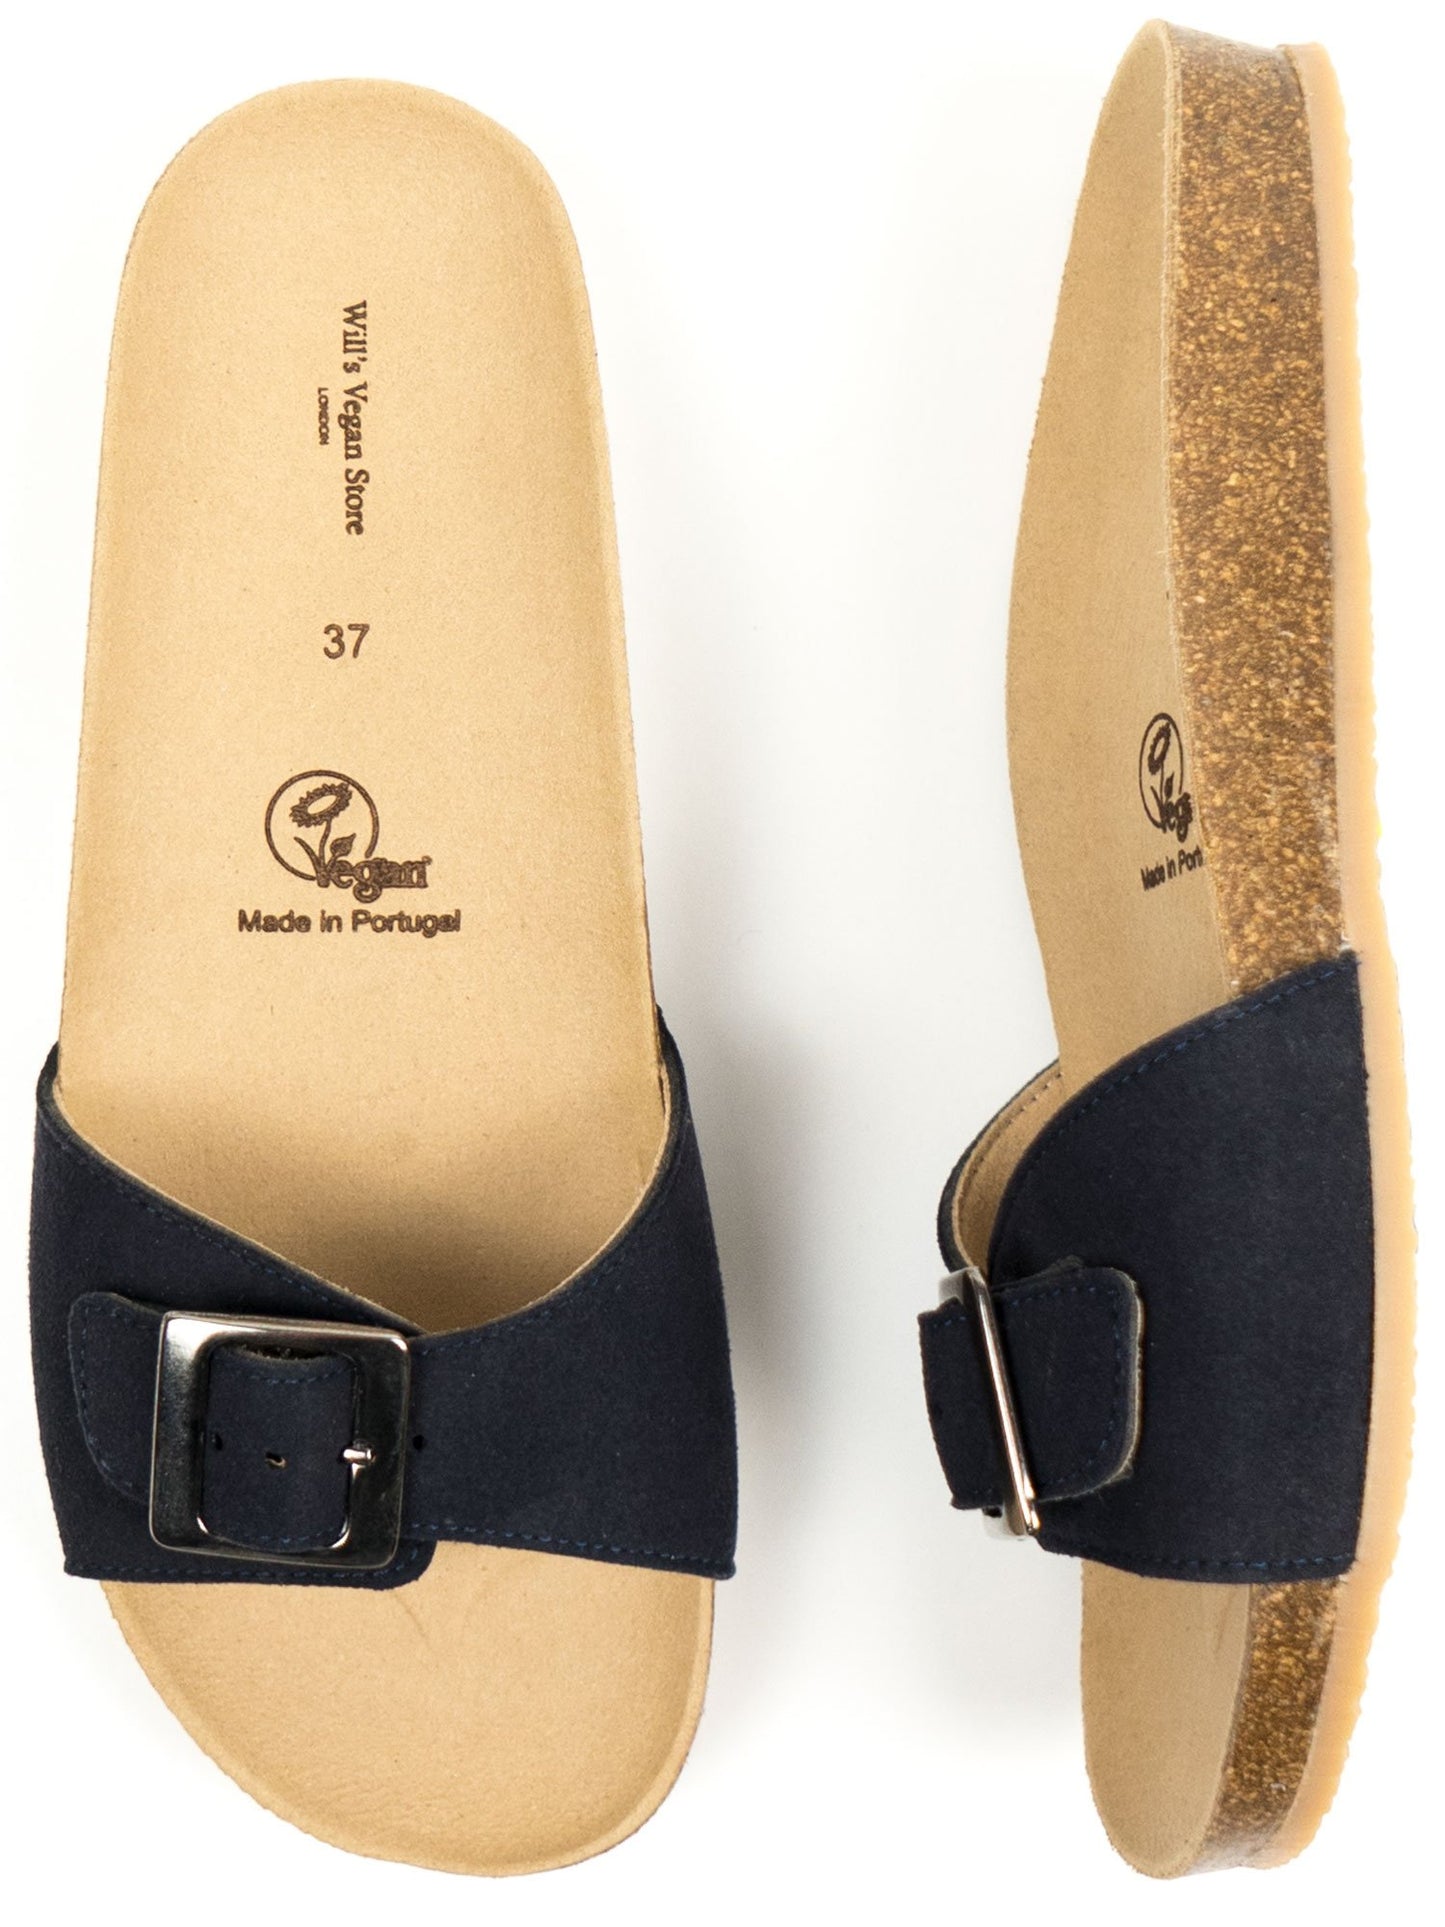 Vegan Women's Single Strap Footbed Sandals | Will's Vegan Store